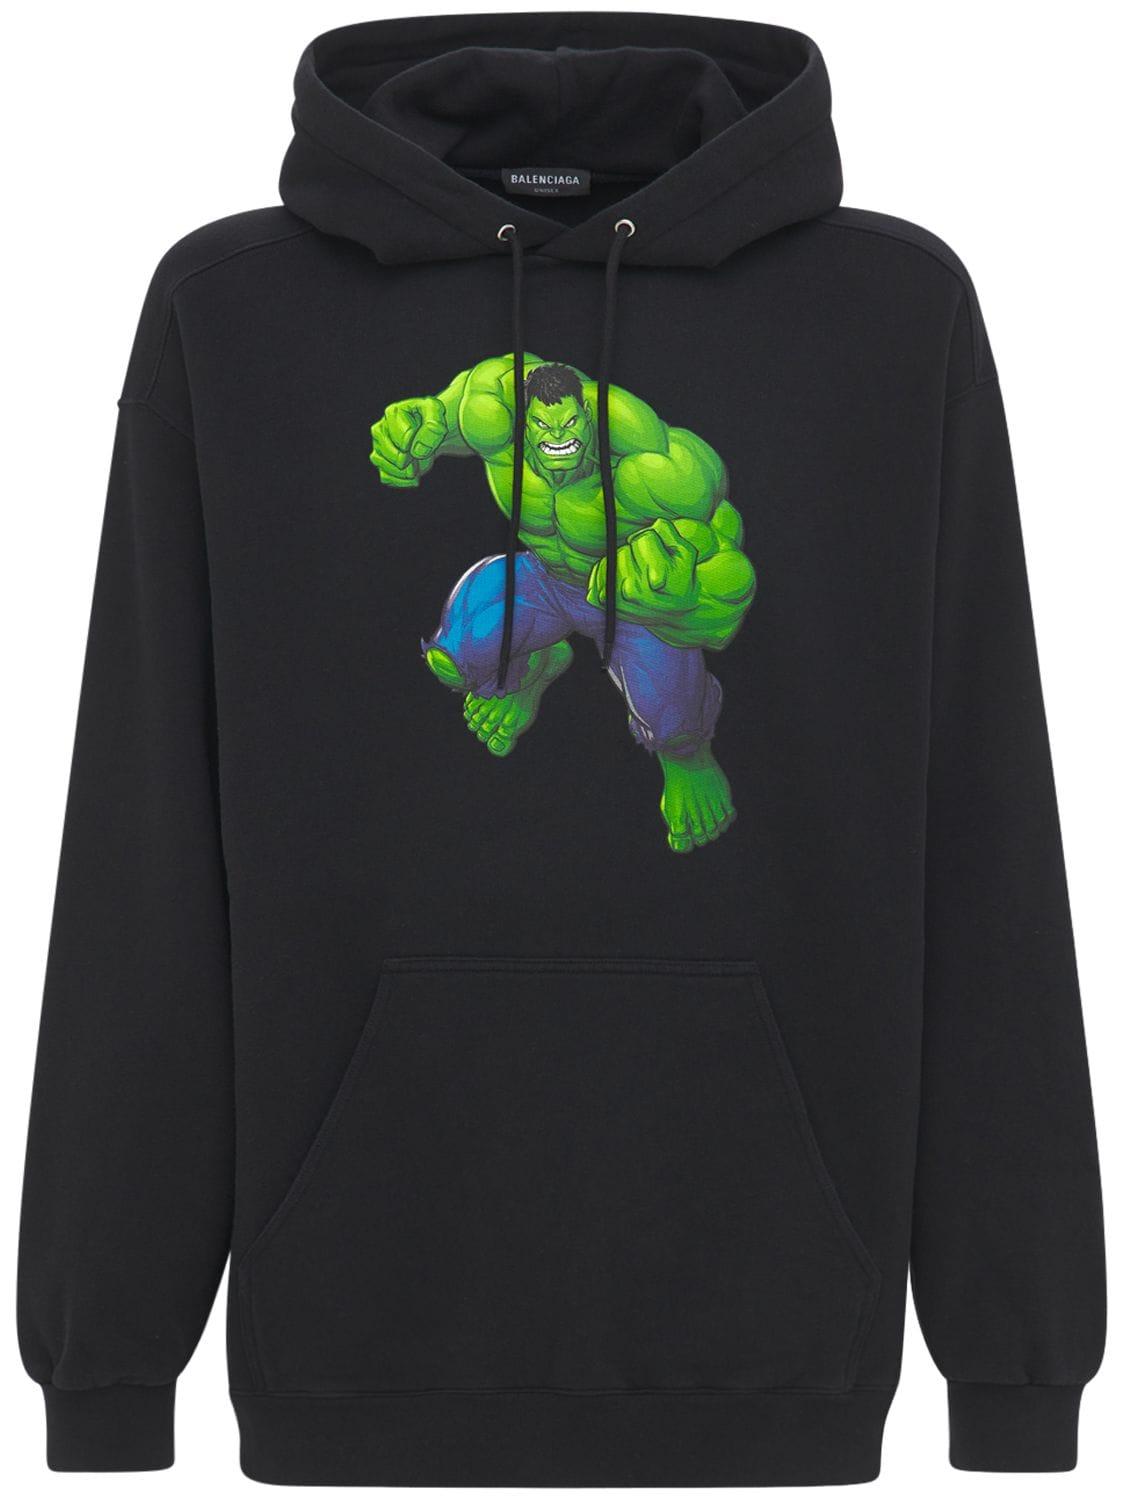 Balenciaga Hulk Cotton Sweatshirt Hoodie in Black for Men - Lyst